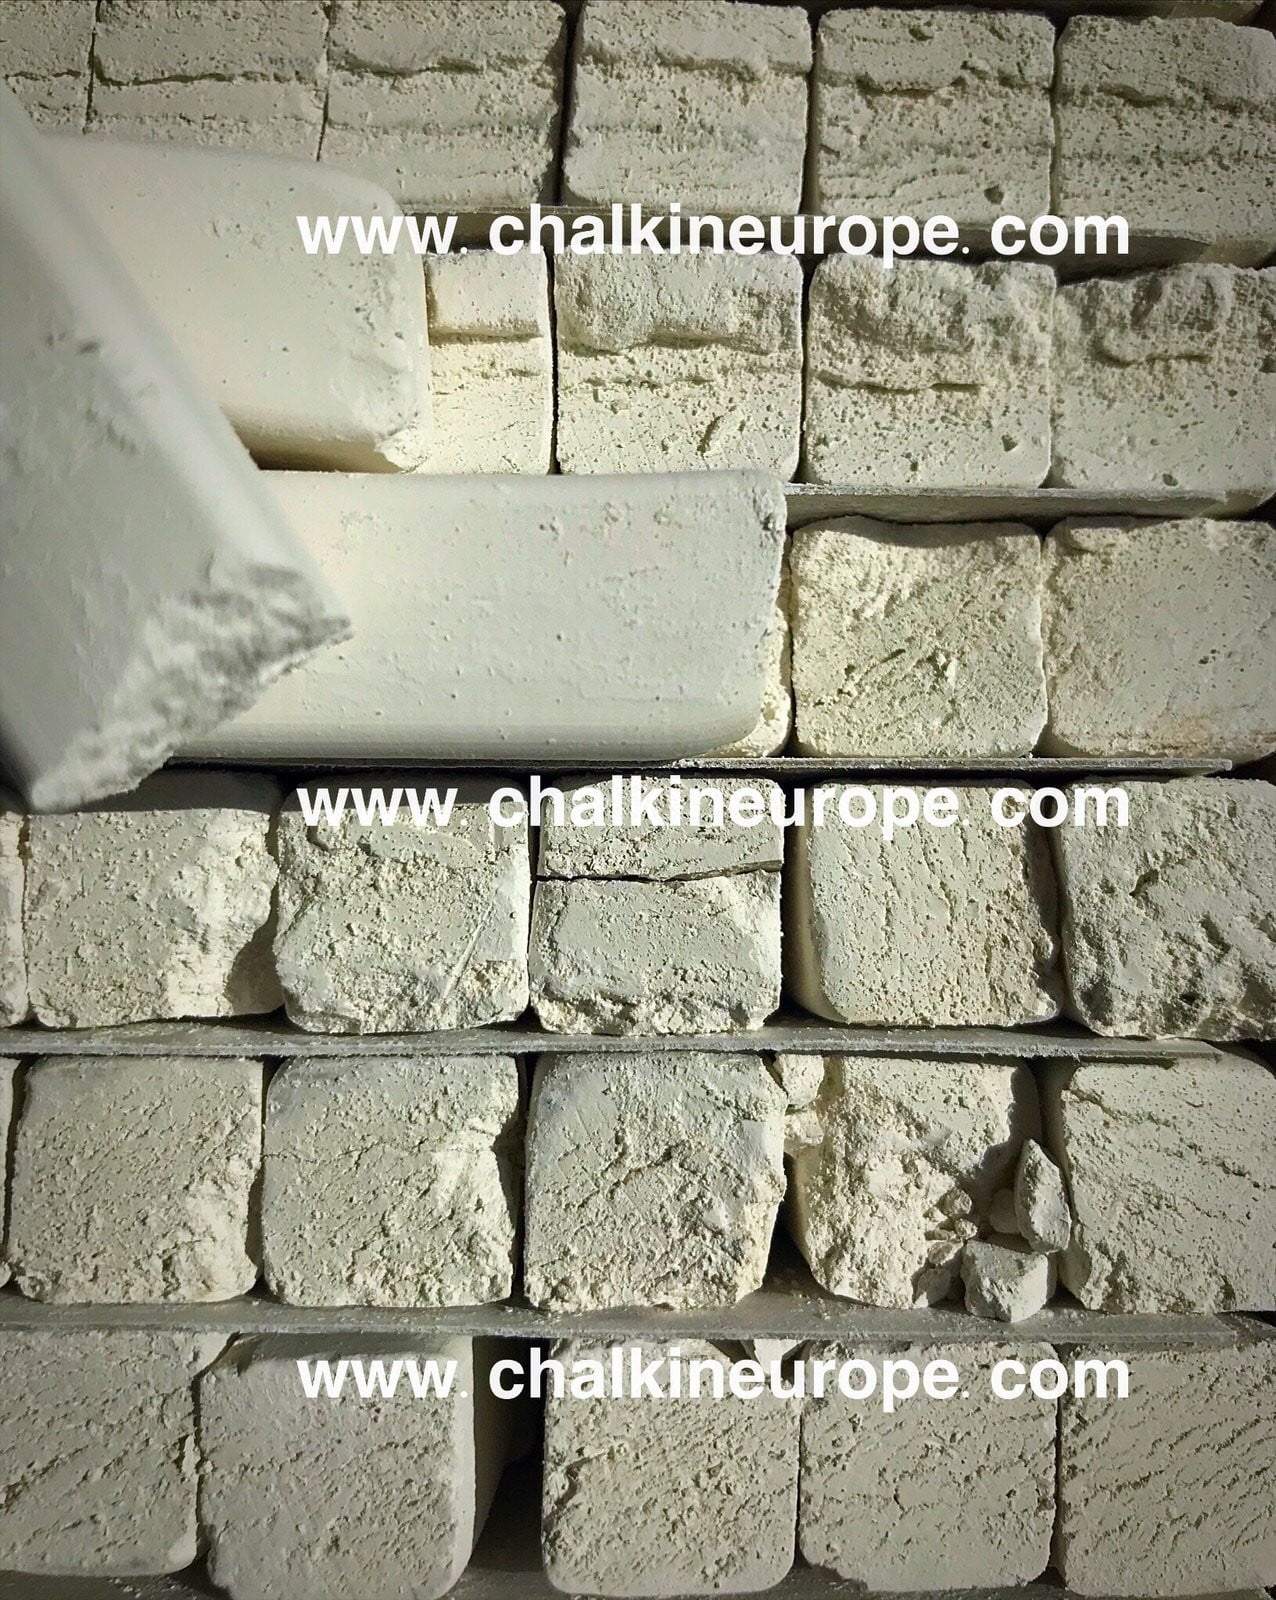 NEW OSKOL Edible Chalk Chunks Natural Crunchy, 100 Gm 4 Oz 9 Kg 20